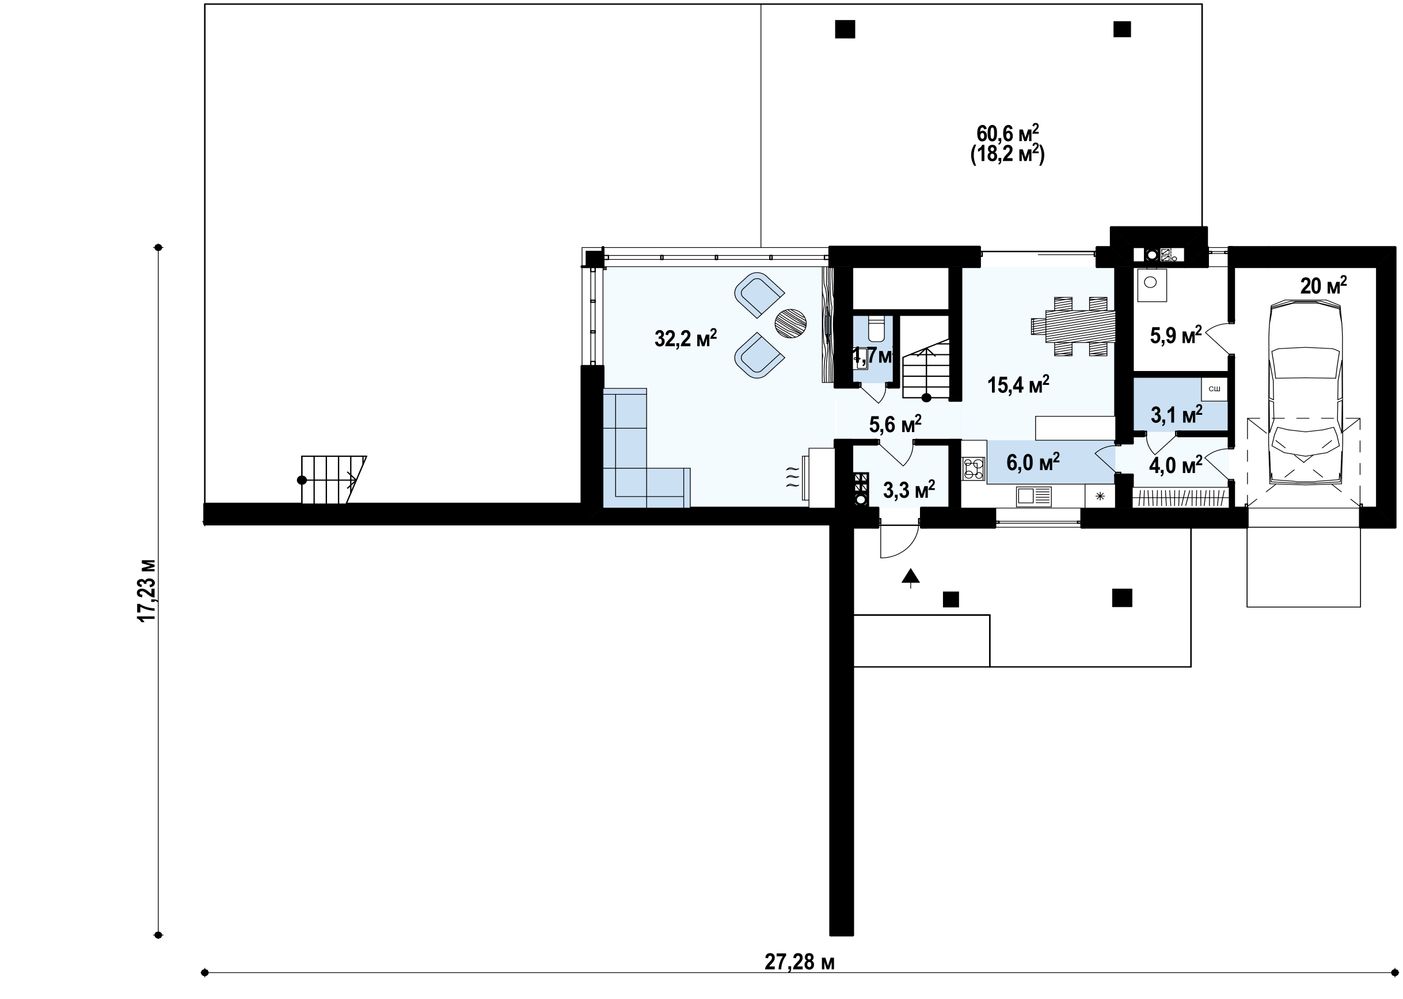 1-ый этаж - план проекта Zx97